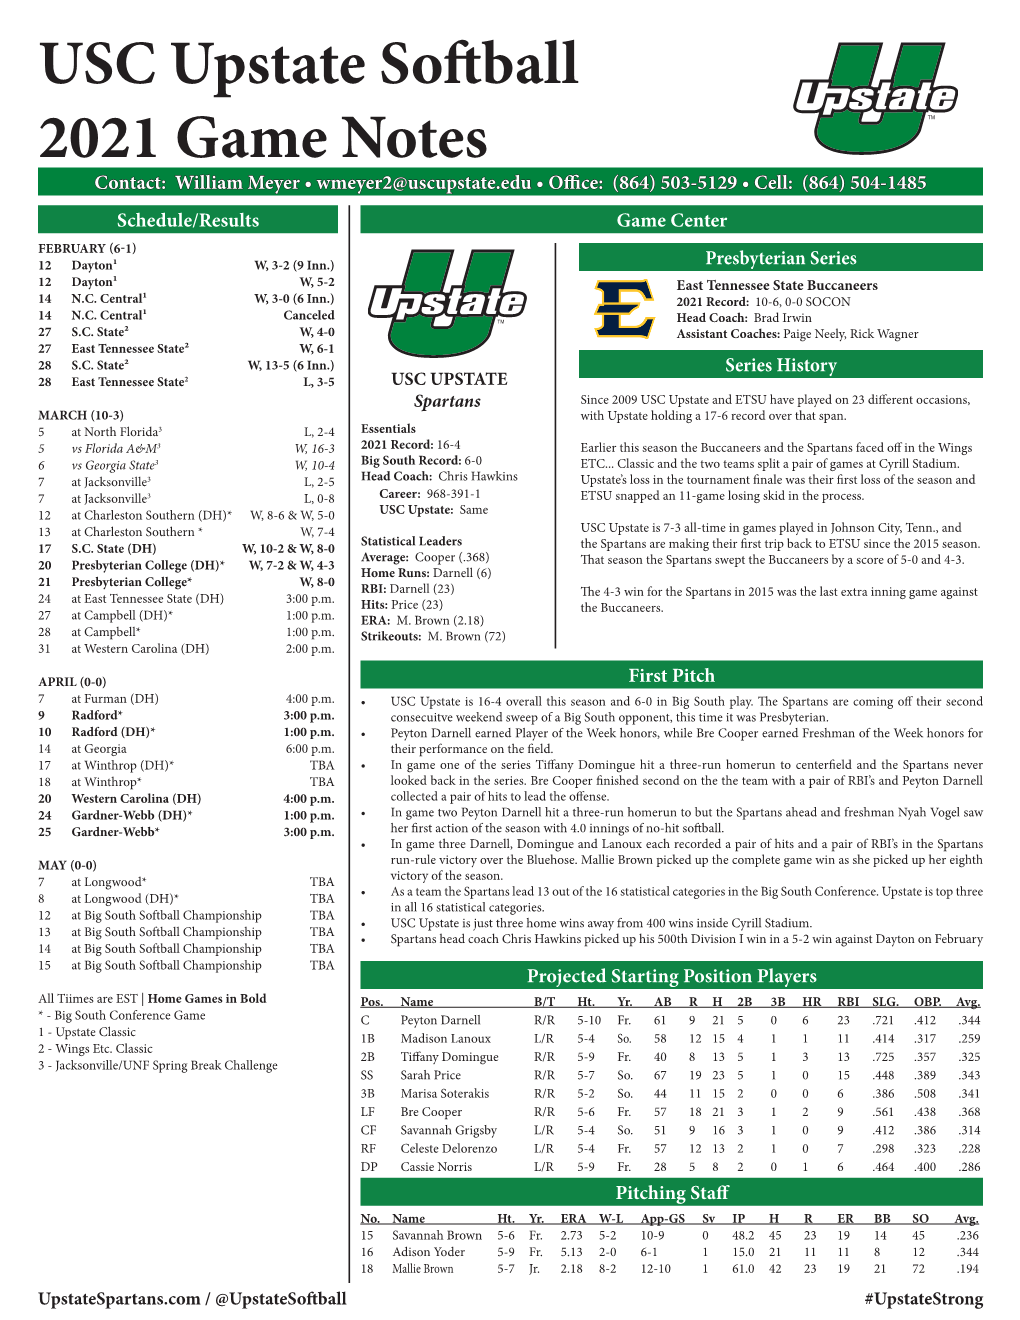 USC Upstate Softball 2021 Game Notes